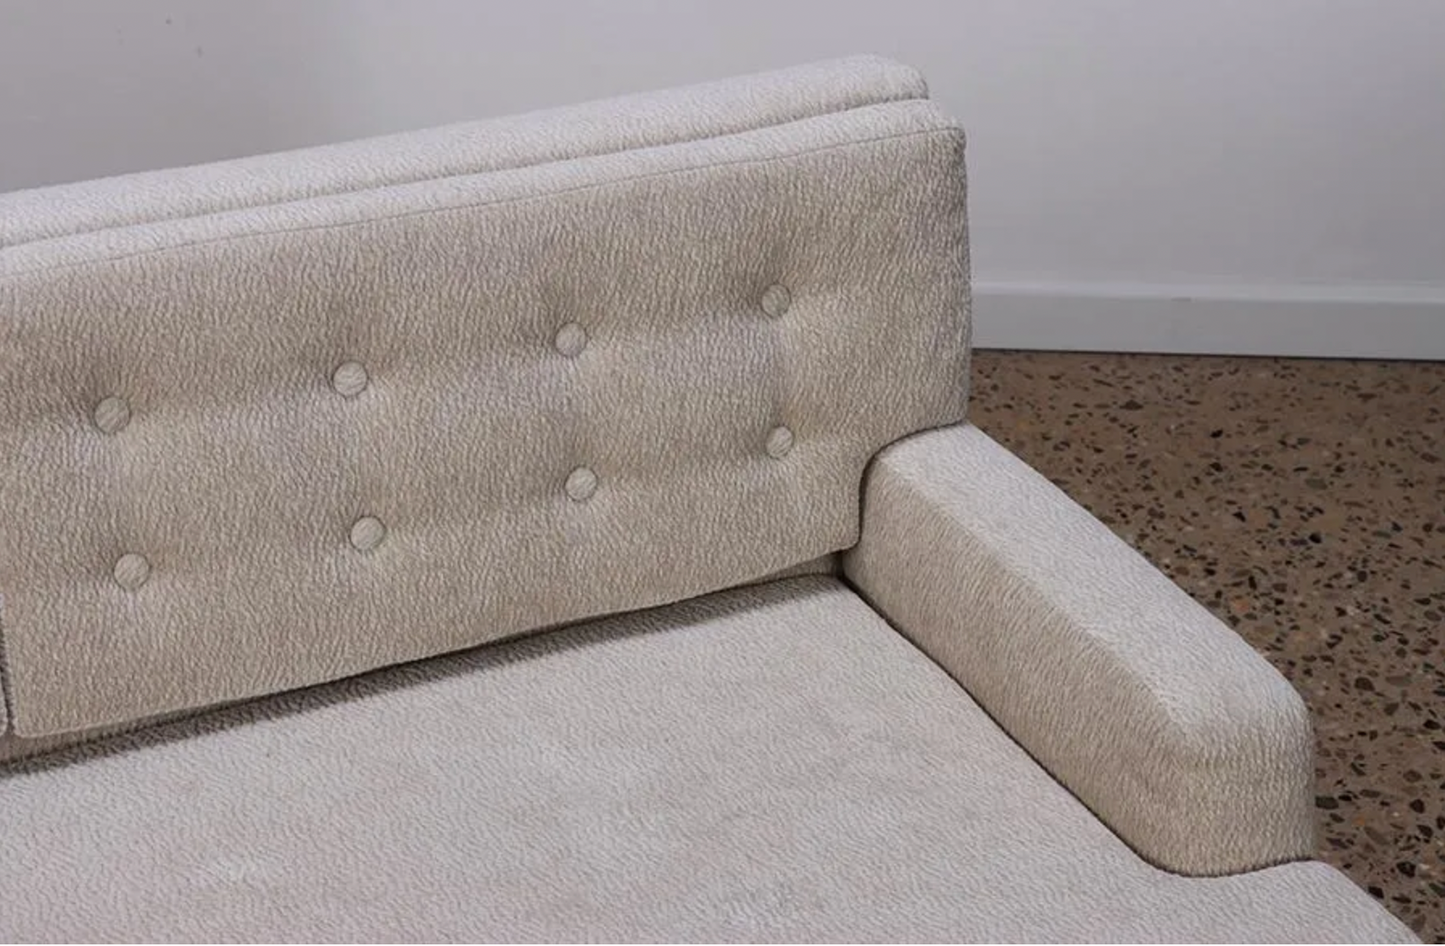 A "Mancini" upholstered sofa